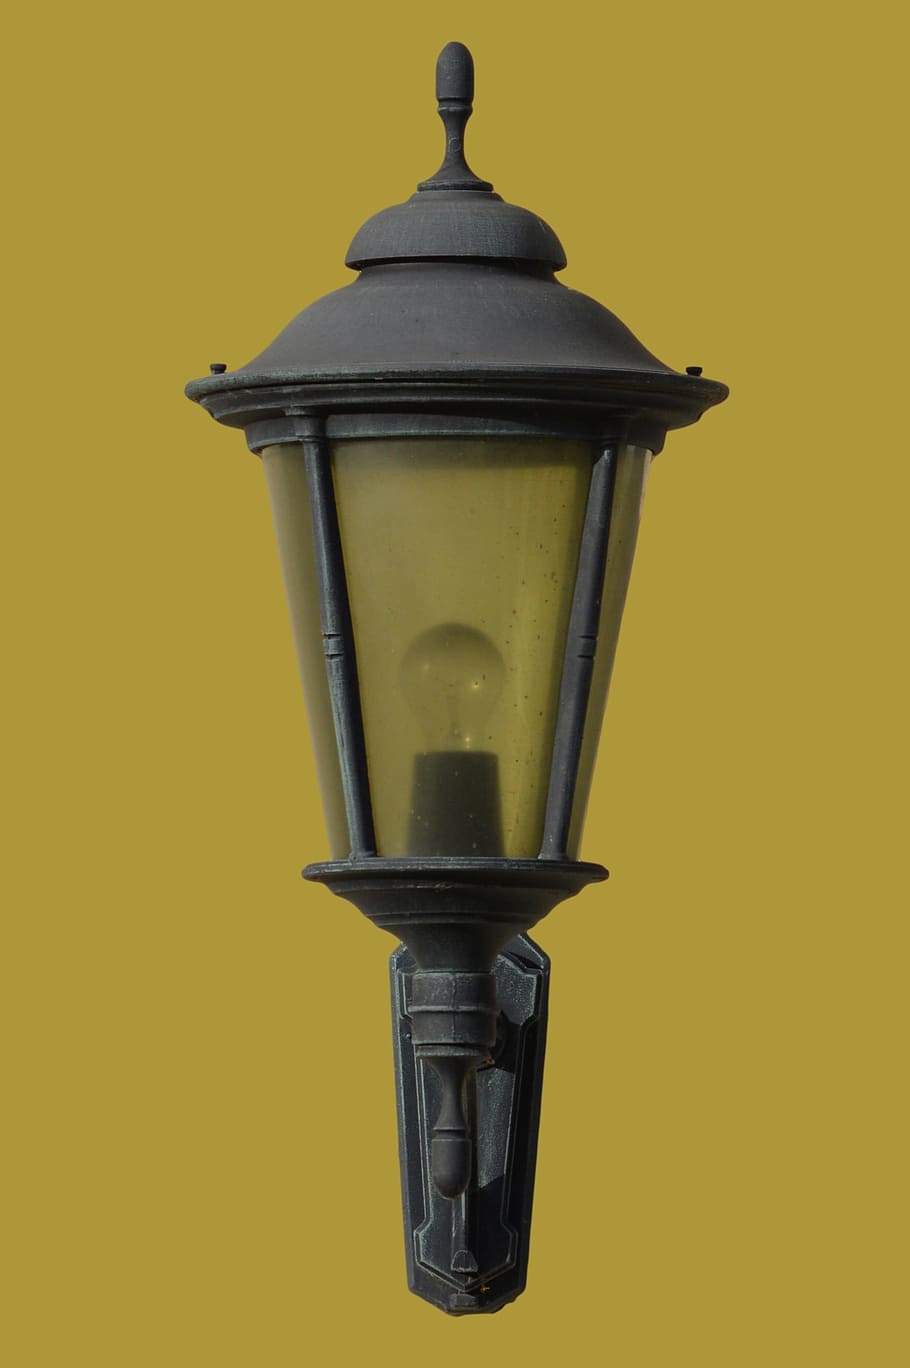 Lantern, Street Light, Lamp, light, yellow, light bulb, studio shot, close-up, lighting equipment, metal